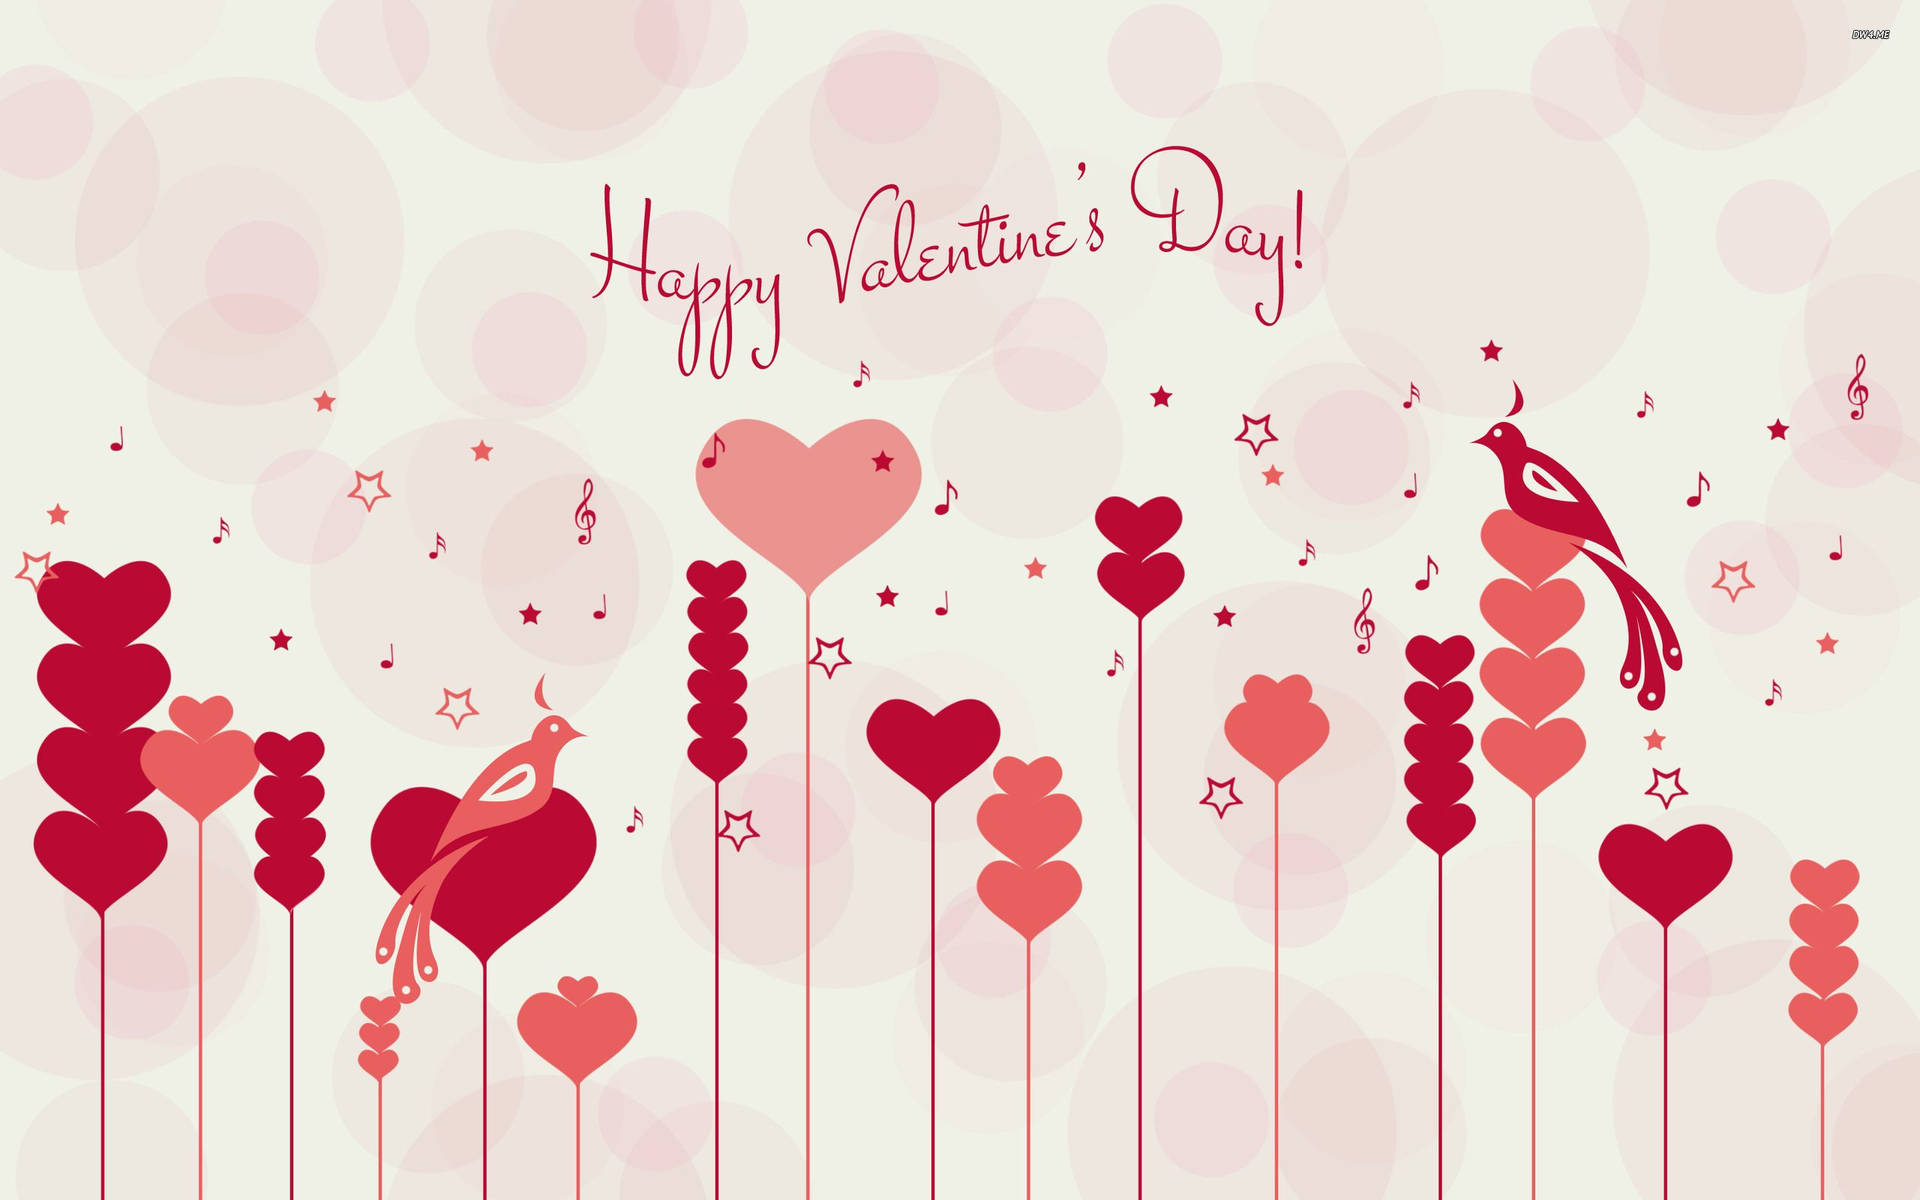 Valentines Day Background Images  Free Download on Freepik